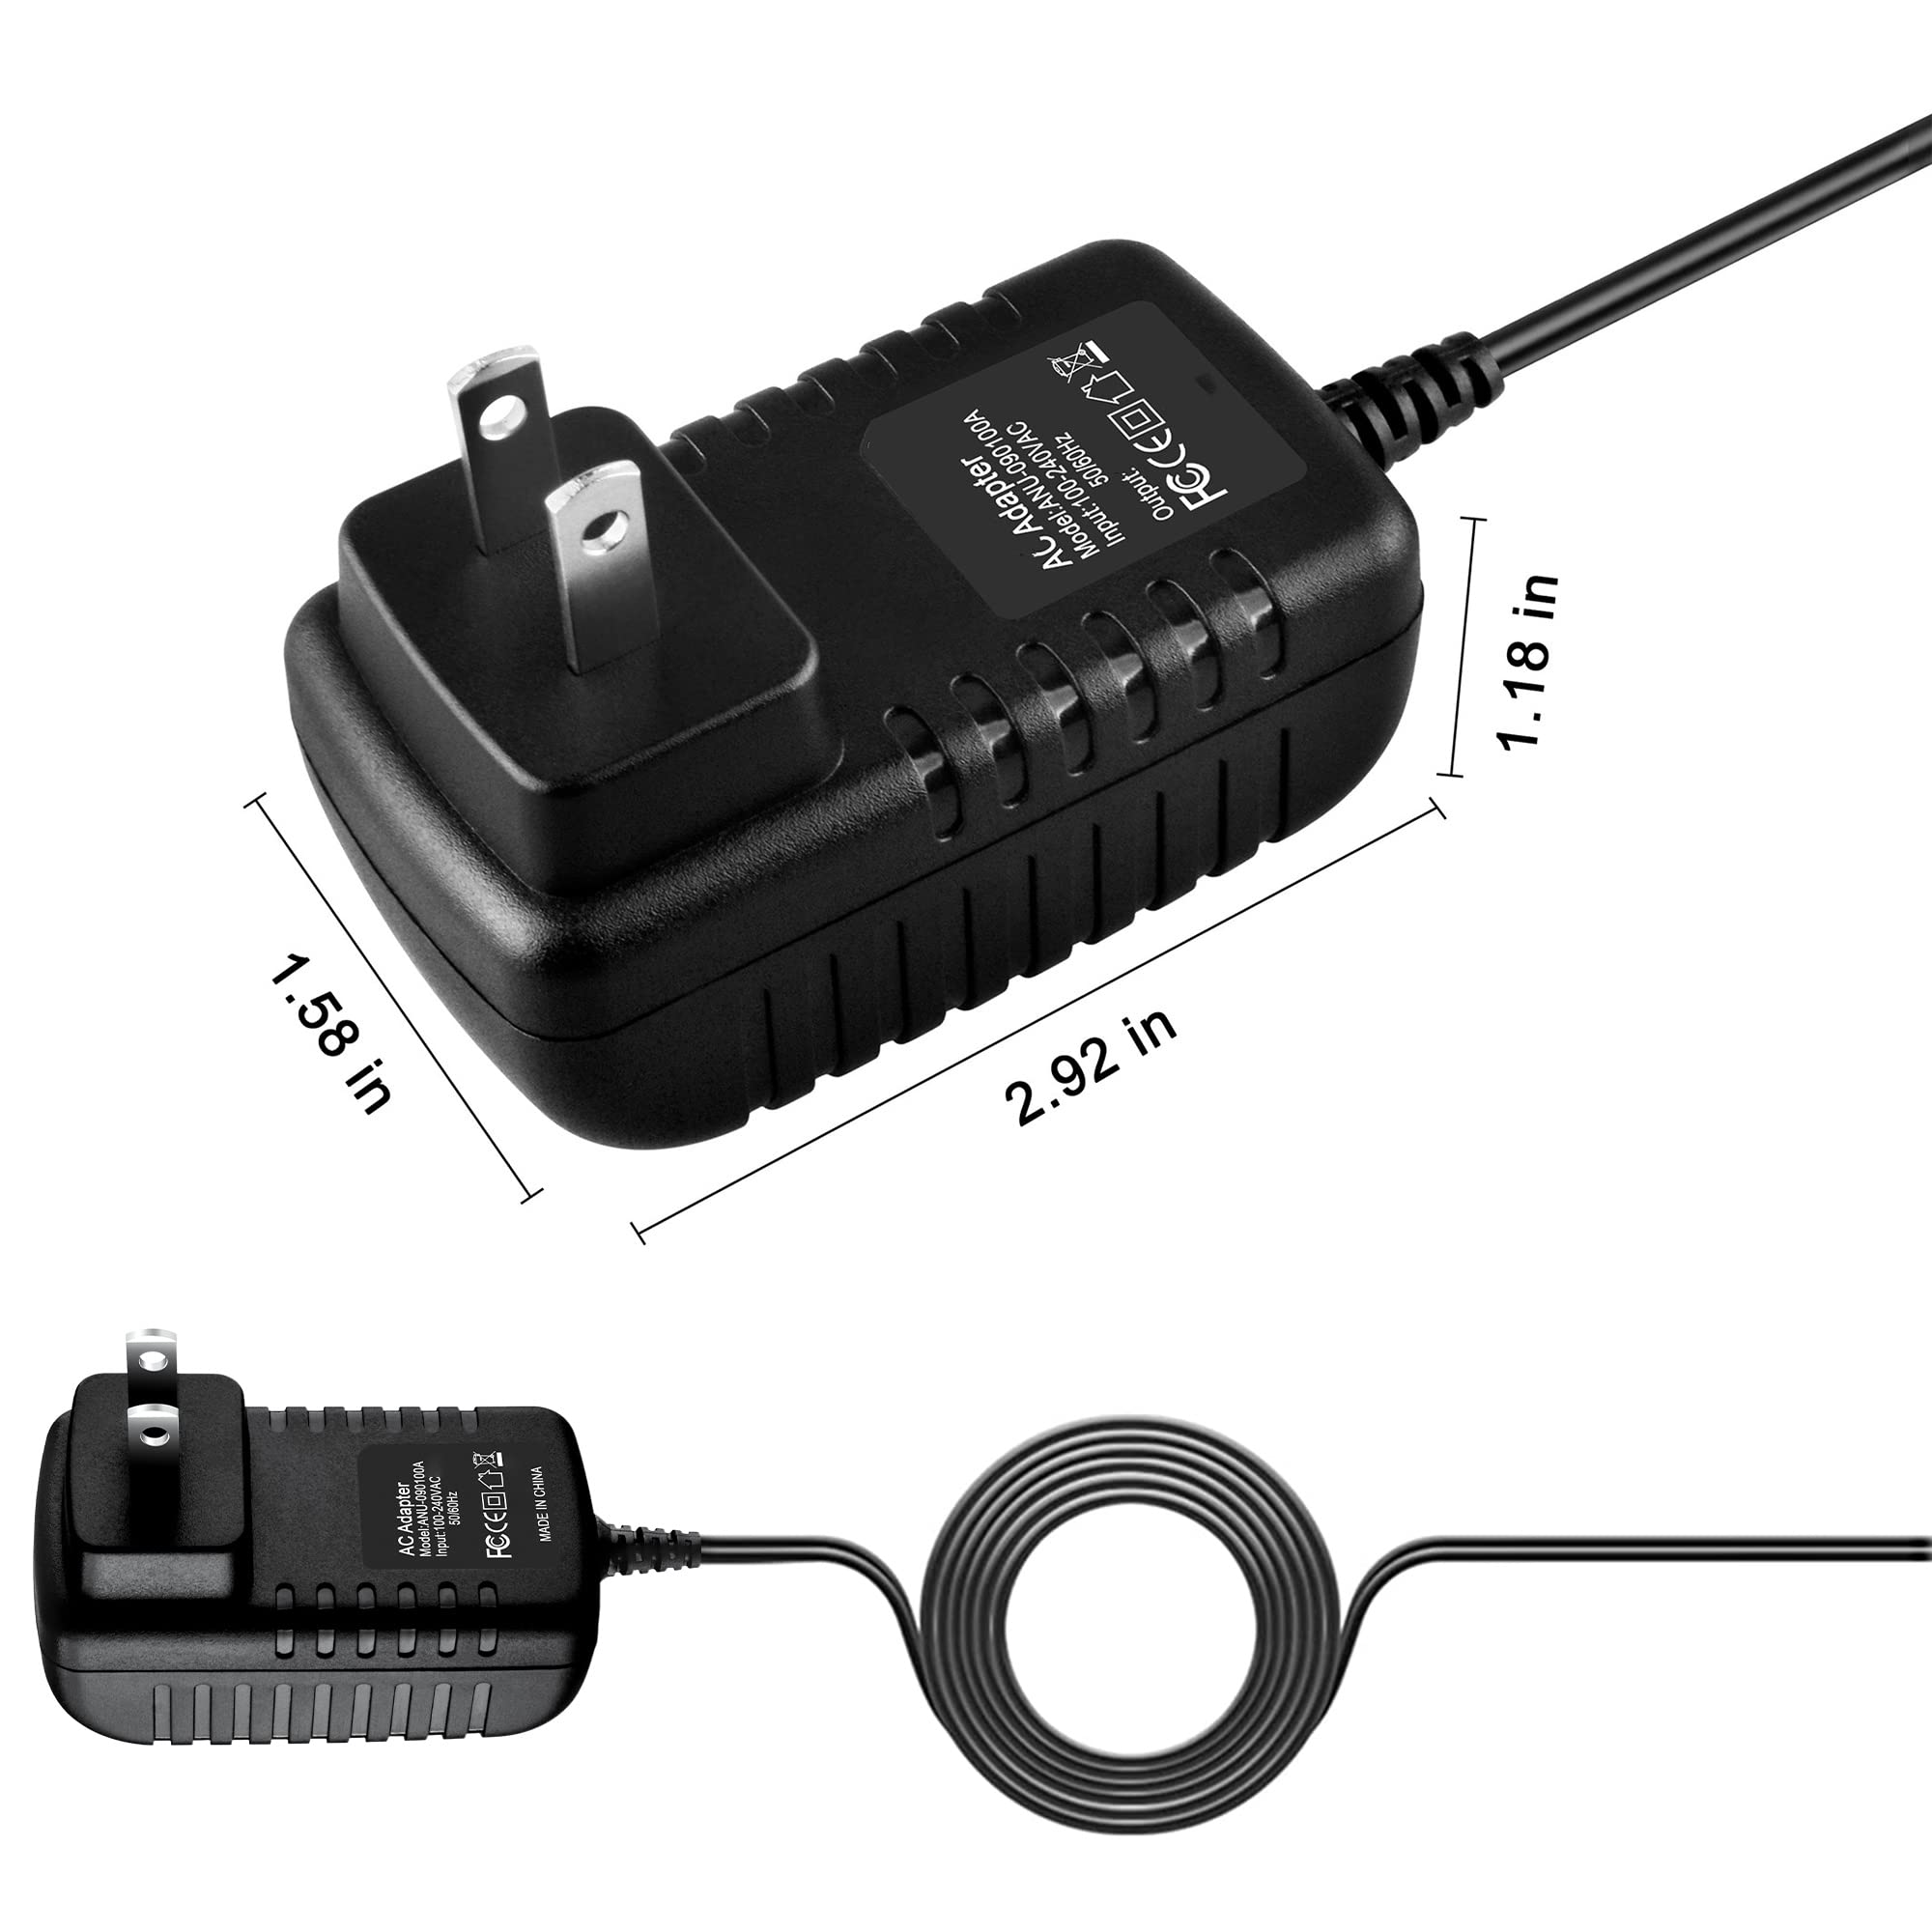 J-ZMQER AC Adapter for Ryobi HP44L 4.0V Screwdriver 720217005 Charger Power Supply Cord